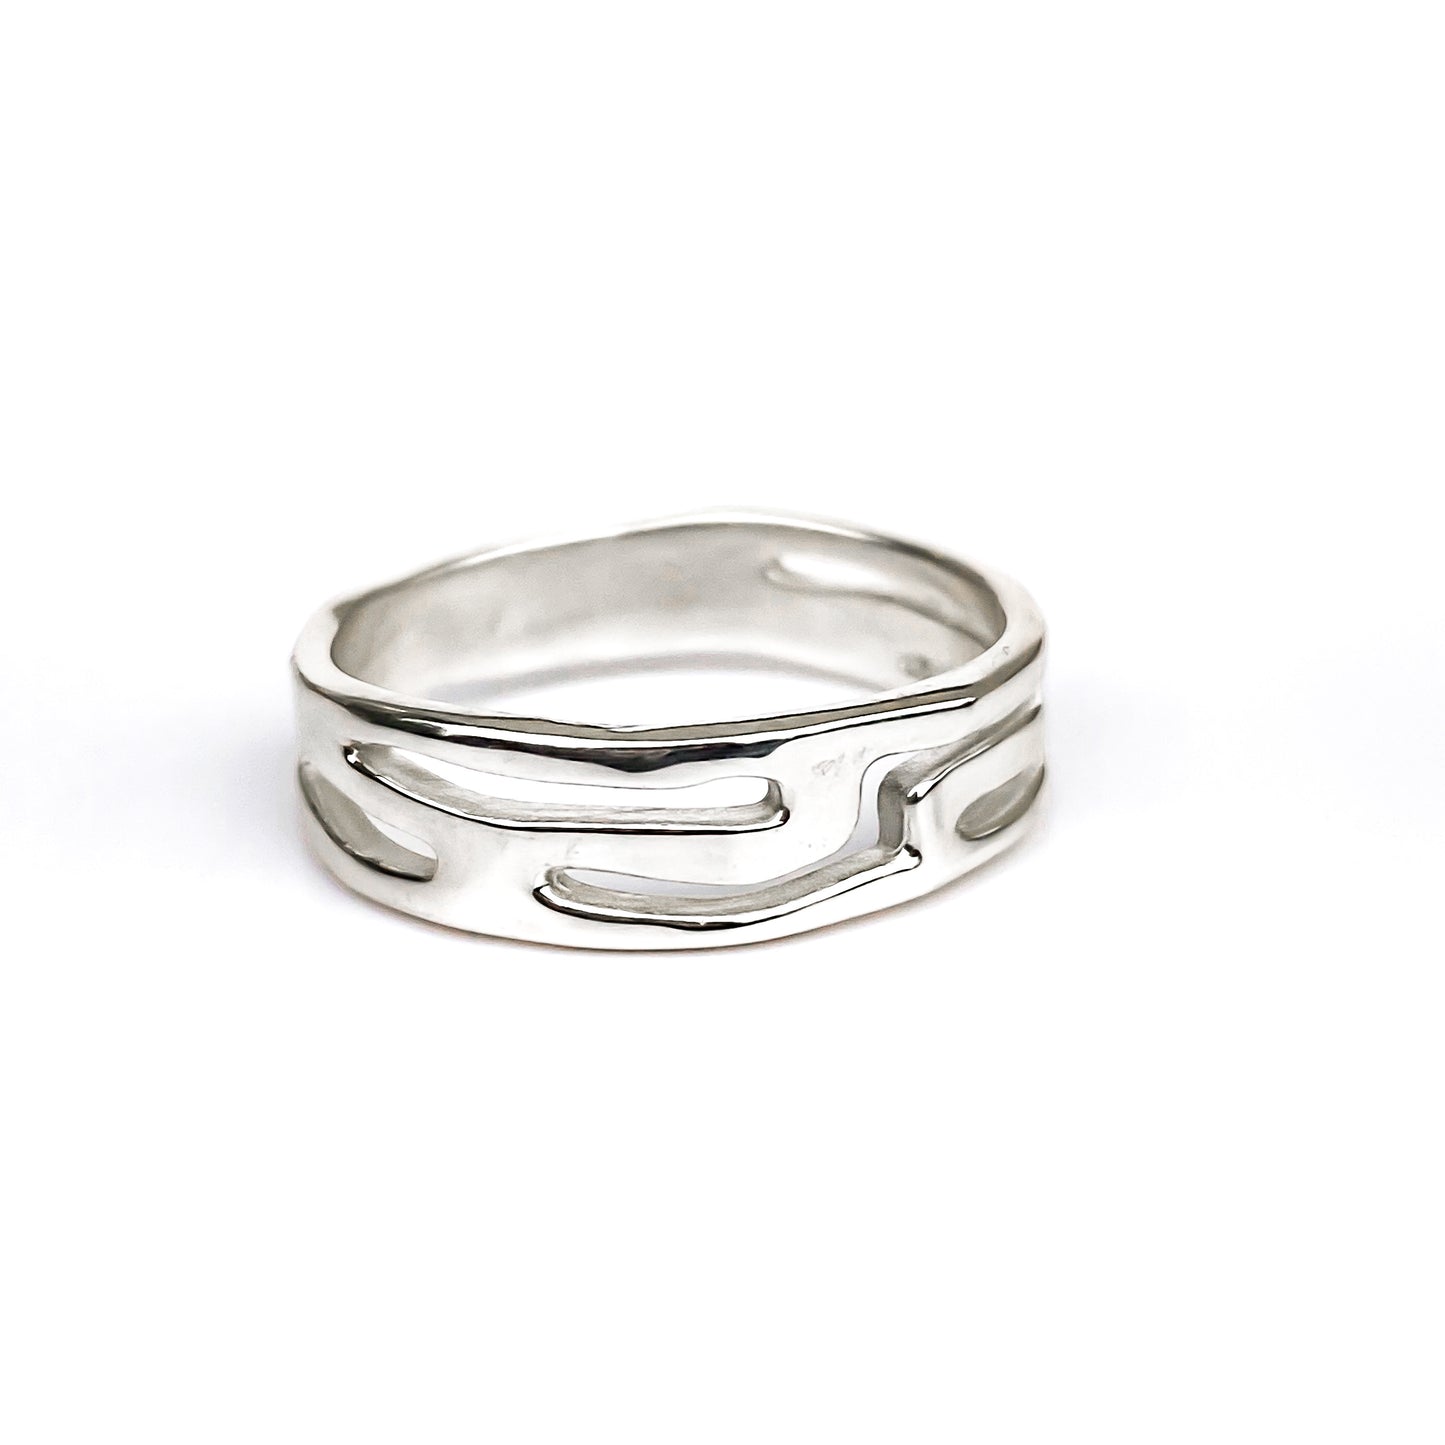 Organic Design Sterling Silver Ring